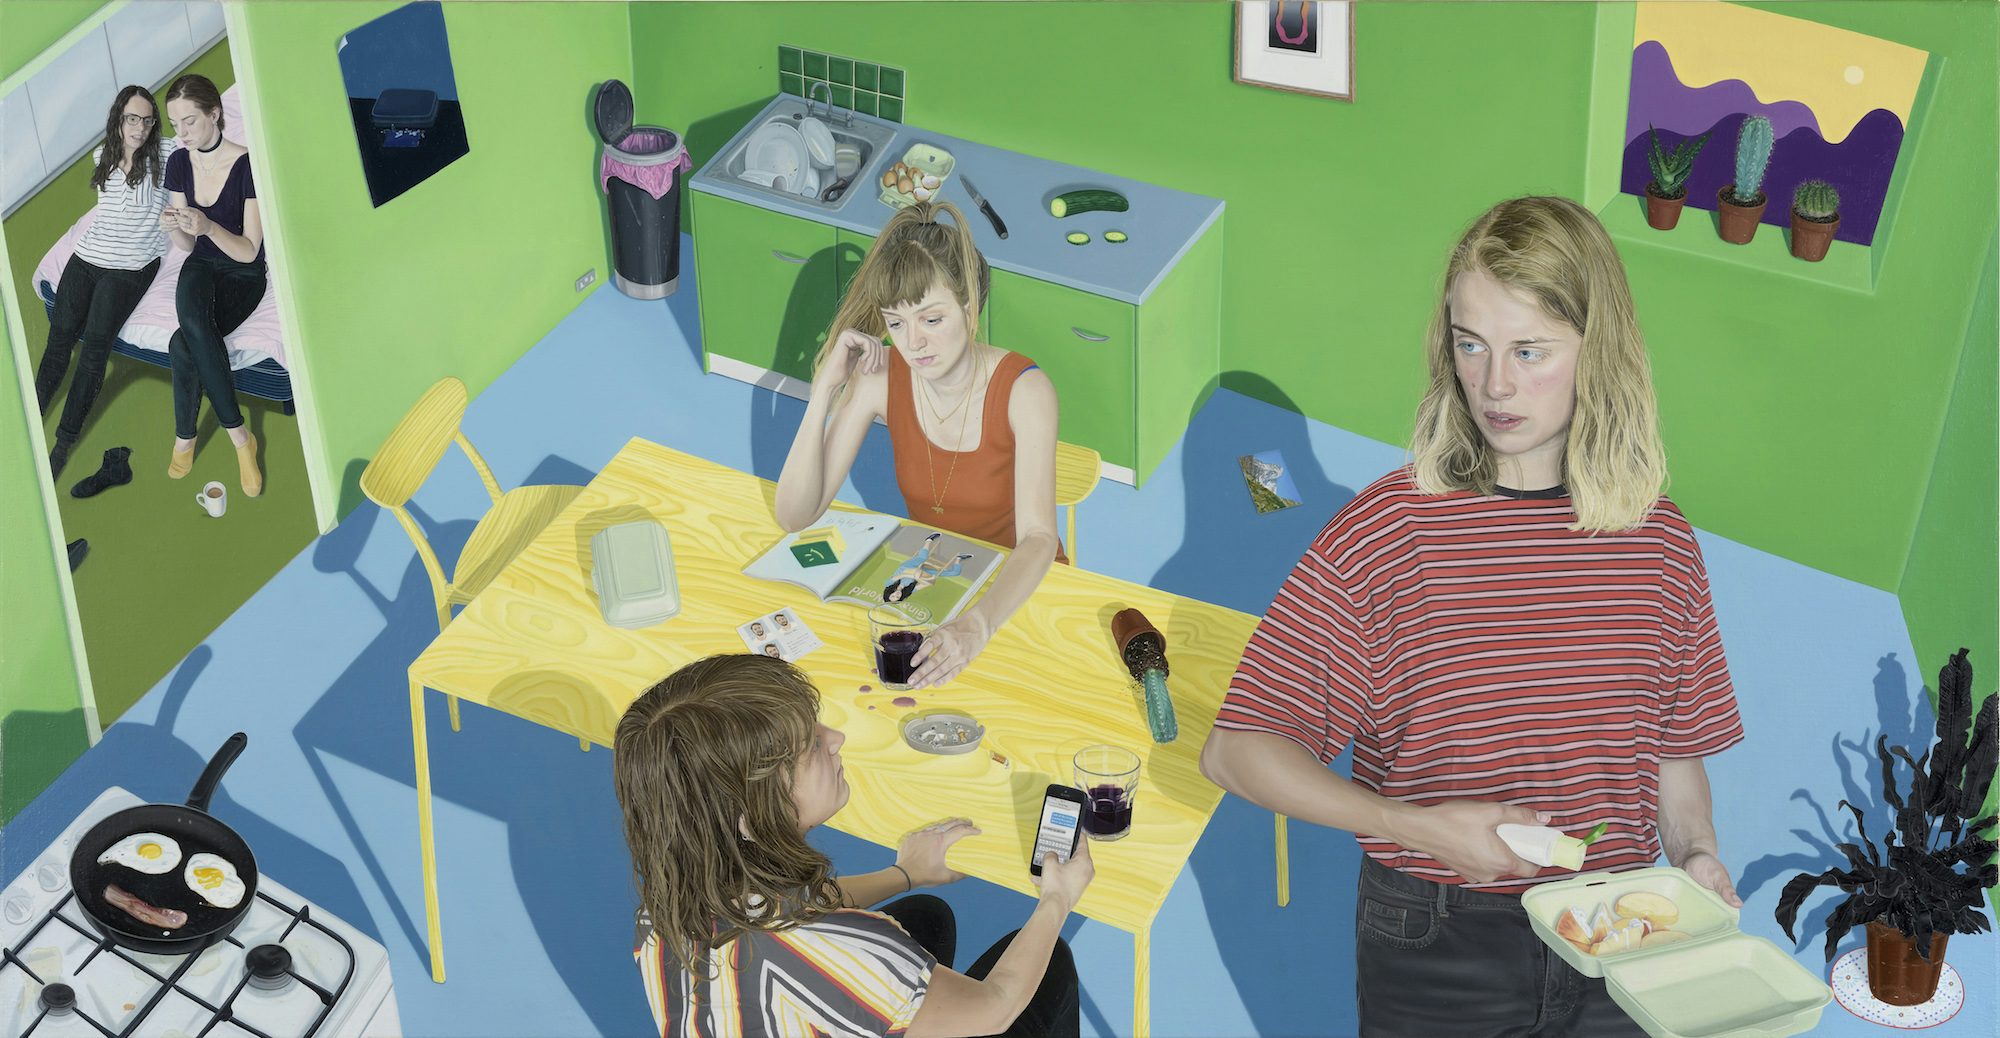 Tristan Pigott's oil painting for Marika Hackman's album, I'm Not Your Man